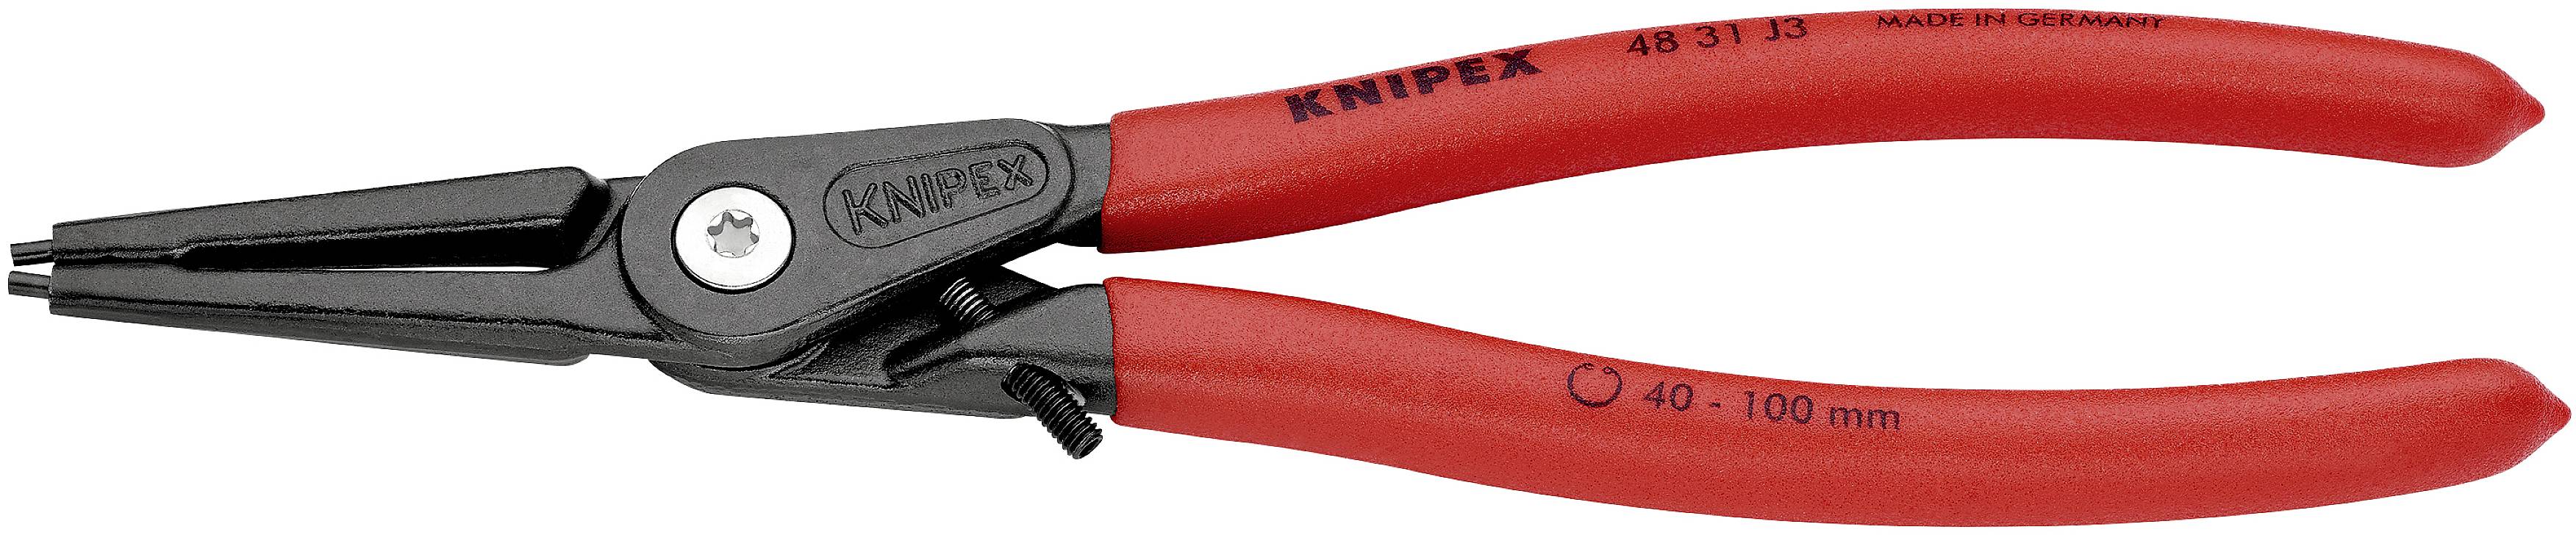 KNIPEX Seegerringzange Passend für Innenringe 40-100 mm Spitzenform gerade 48 31 J3 (48 31 J3)